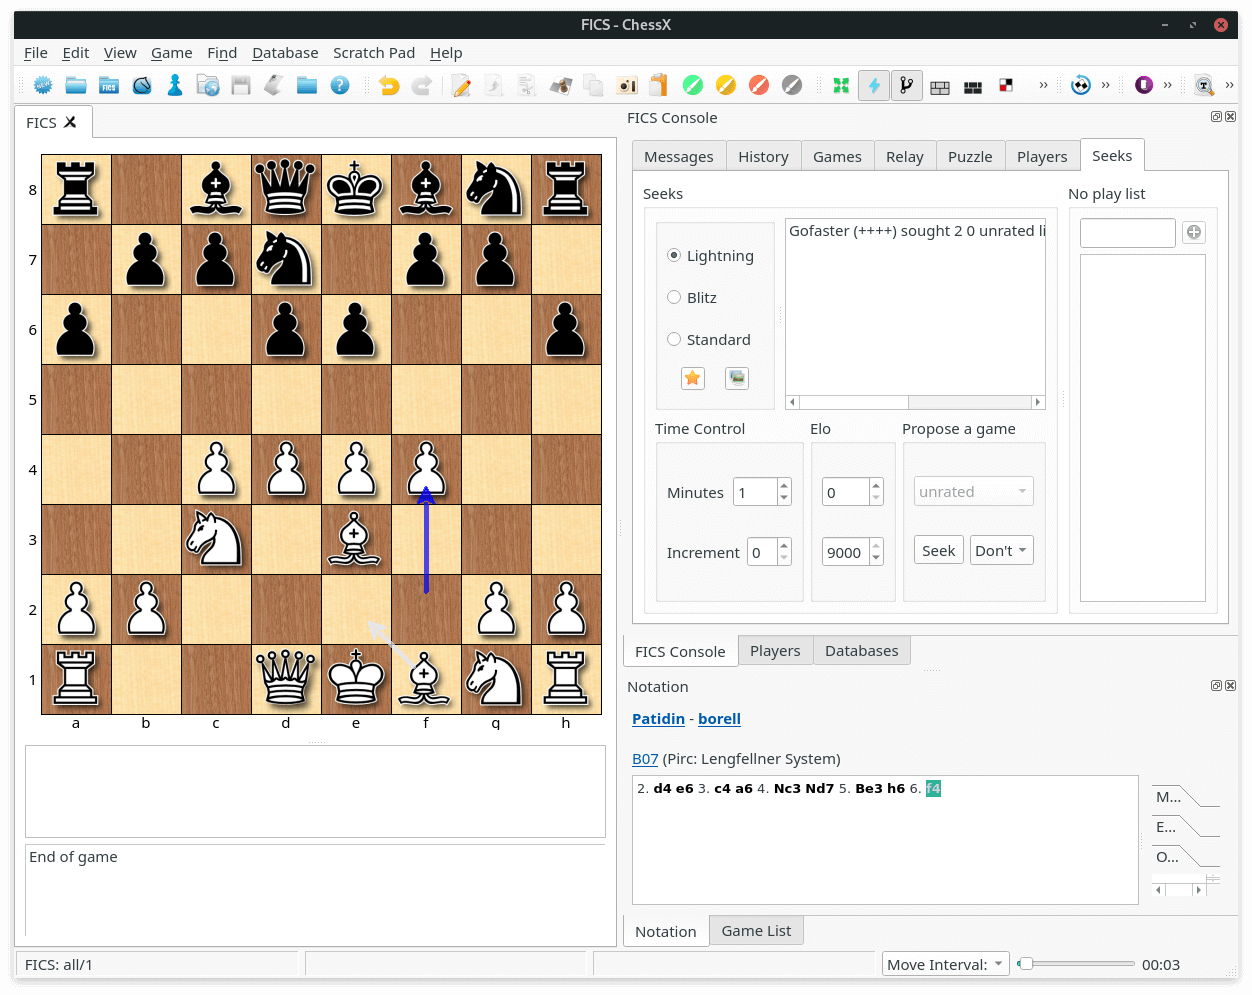 ChessX